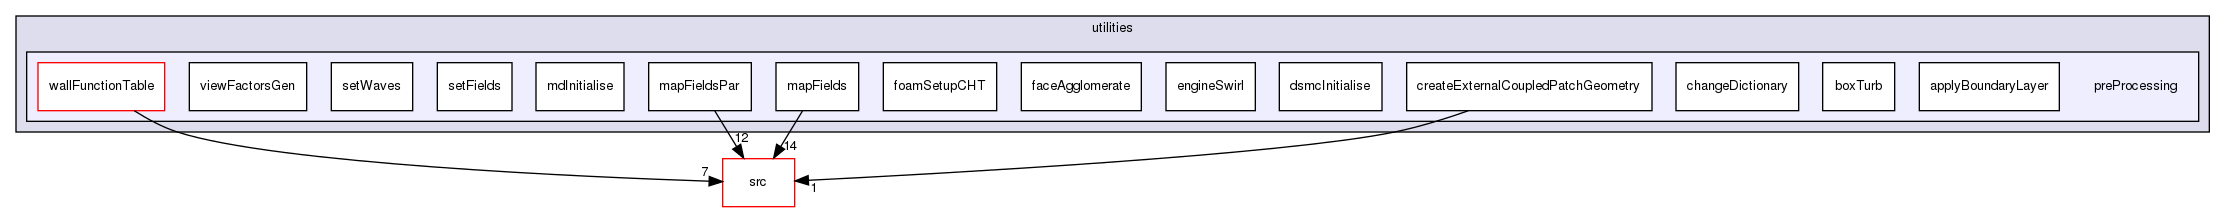 applications/utilities/preProcessing